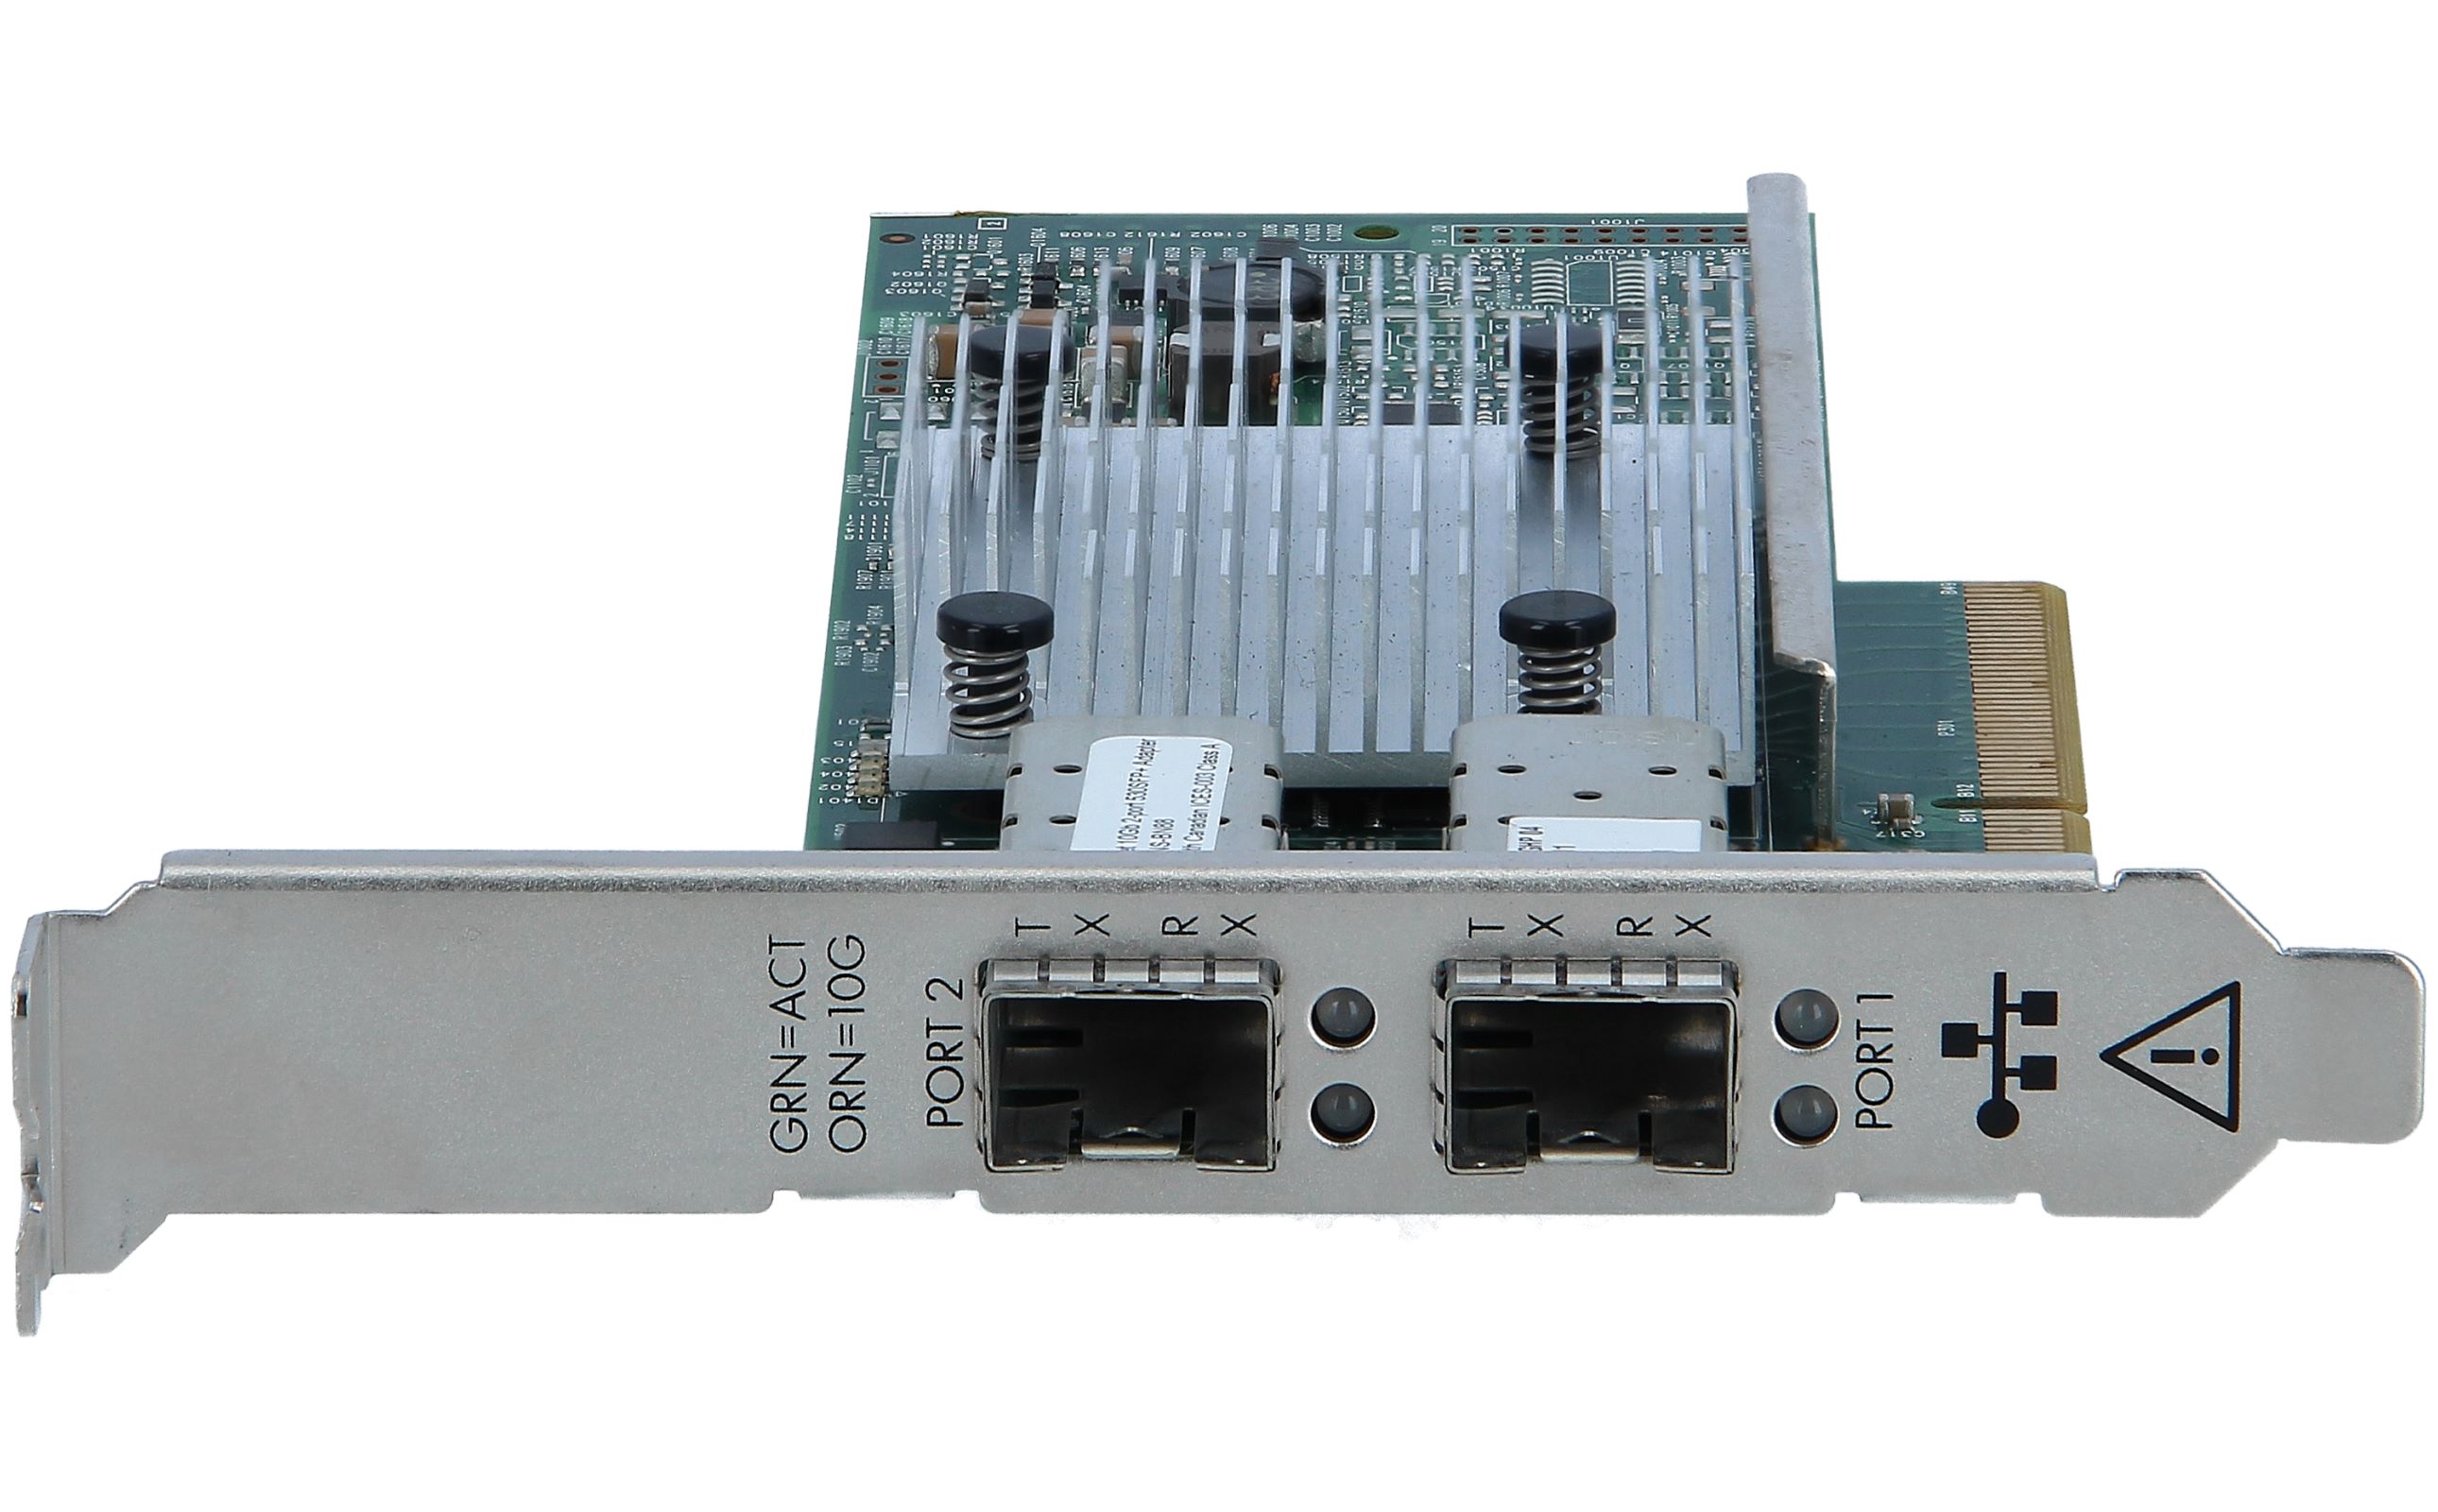 PCIe x8 2.0 652501-001 dual-port 10gbe-lan SFP HP 652503-b21 656244-001 530sfp 